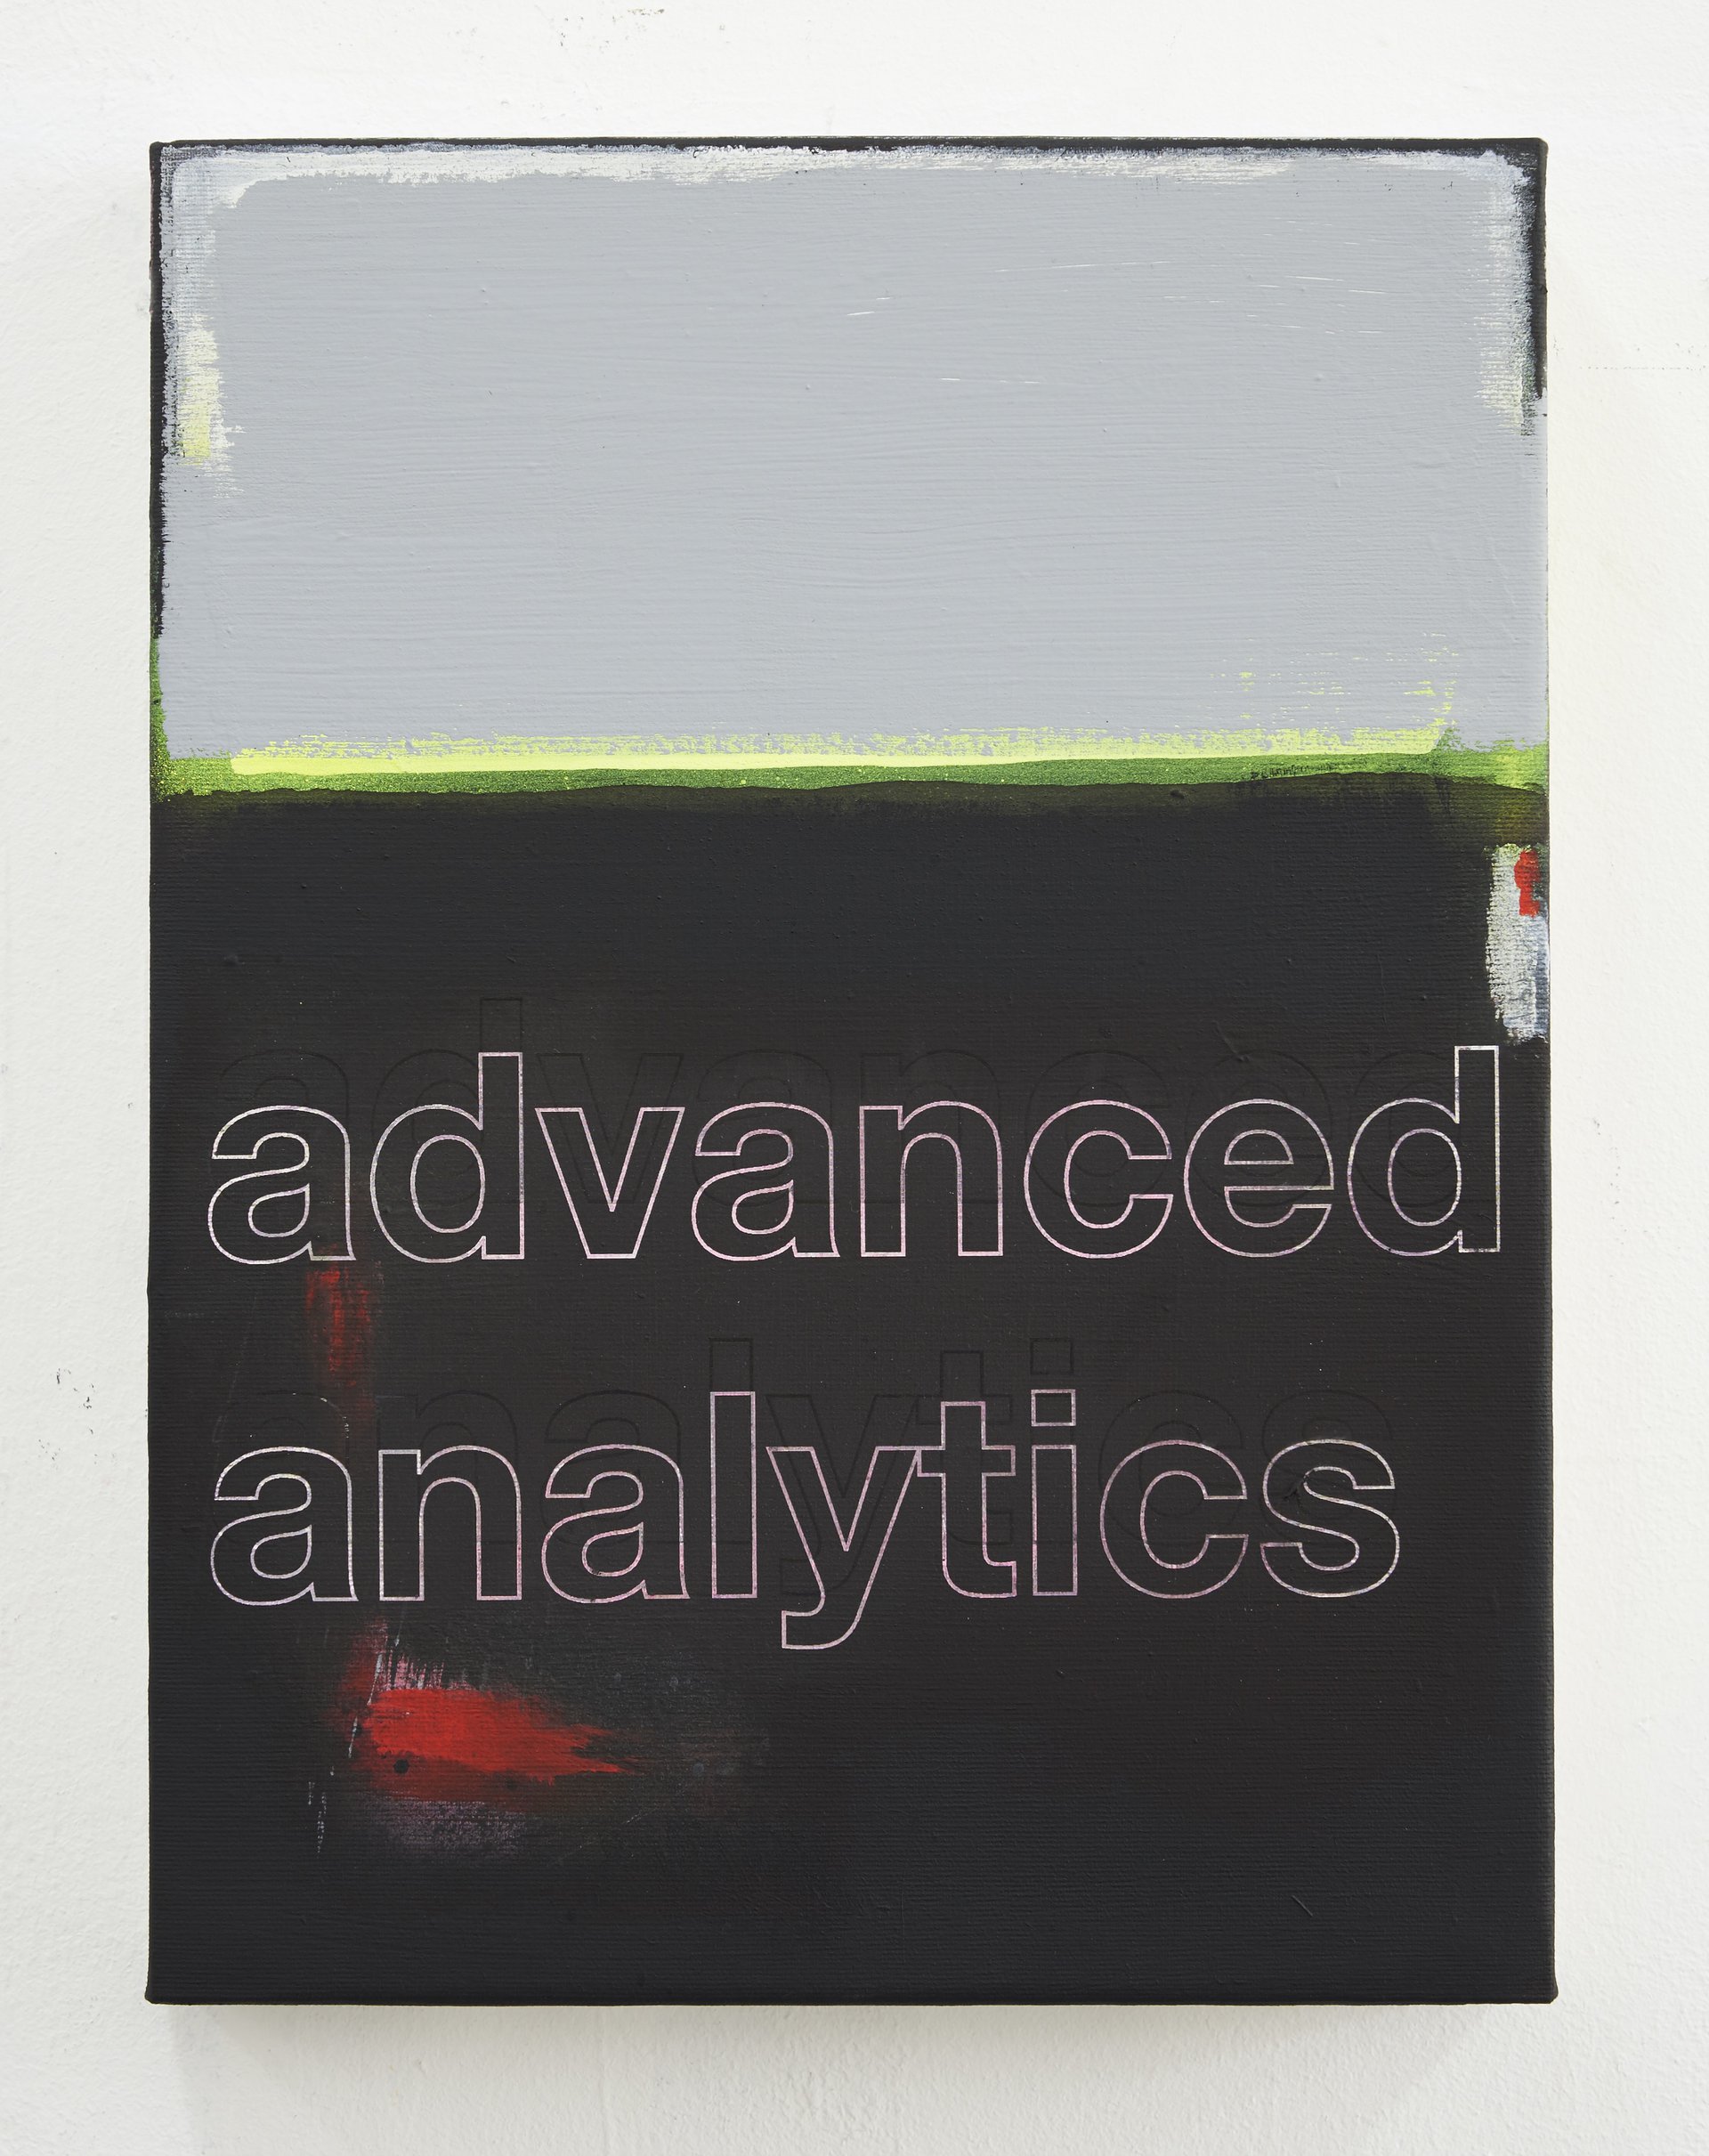 Johannes Wohnseifer, Advanced Analytics, 2017